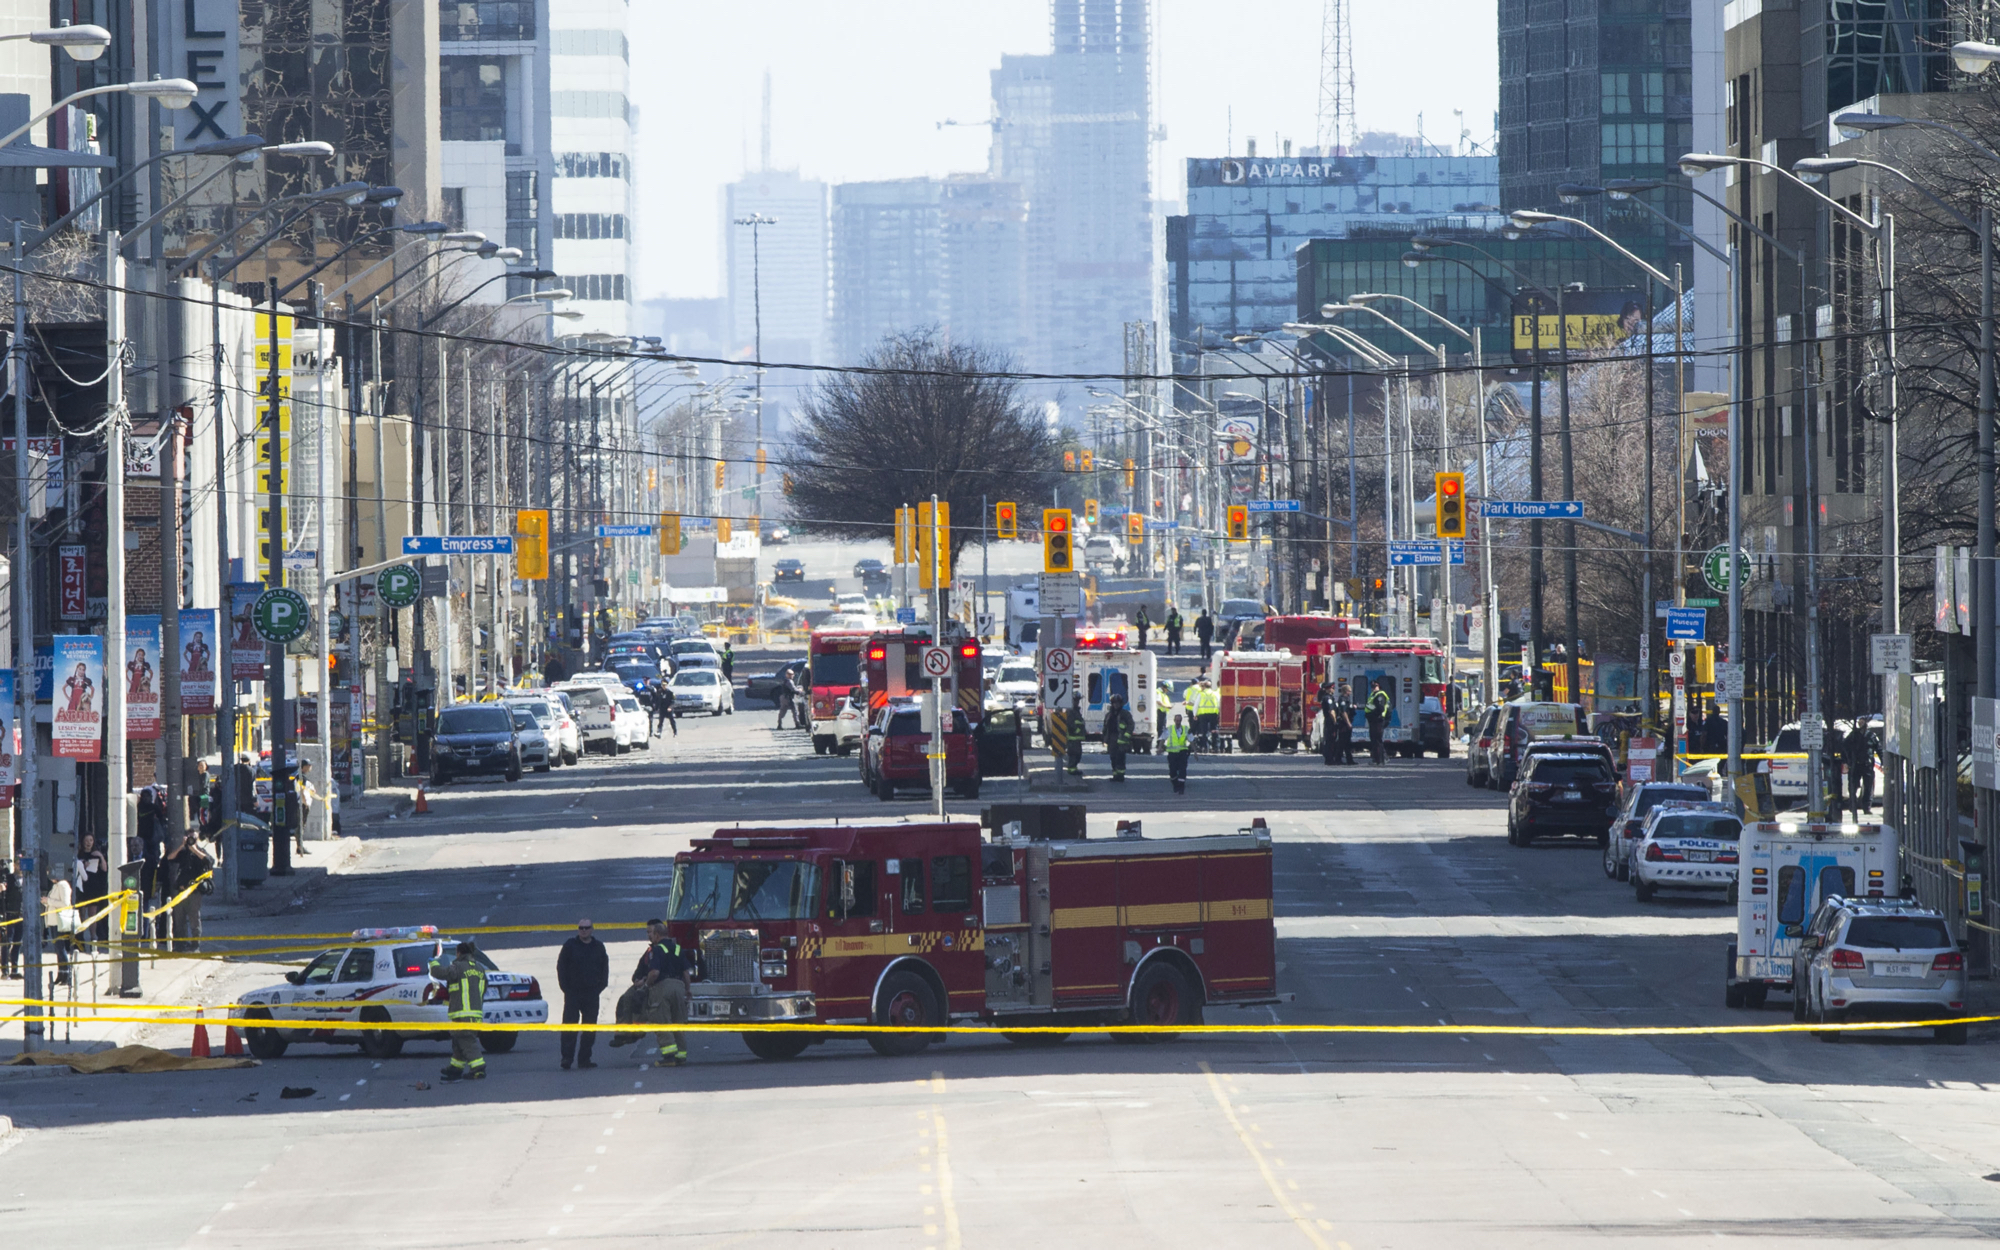 Toronto Archbishop calls for prayer after van ploughs into pedestrians, killing 10